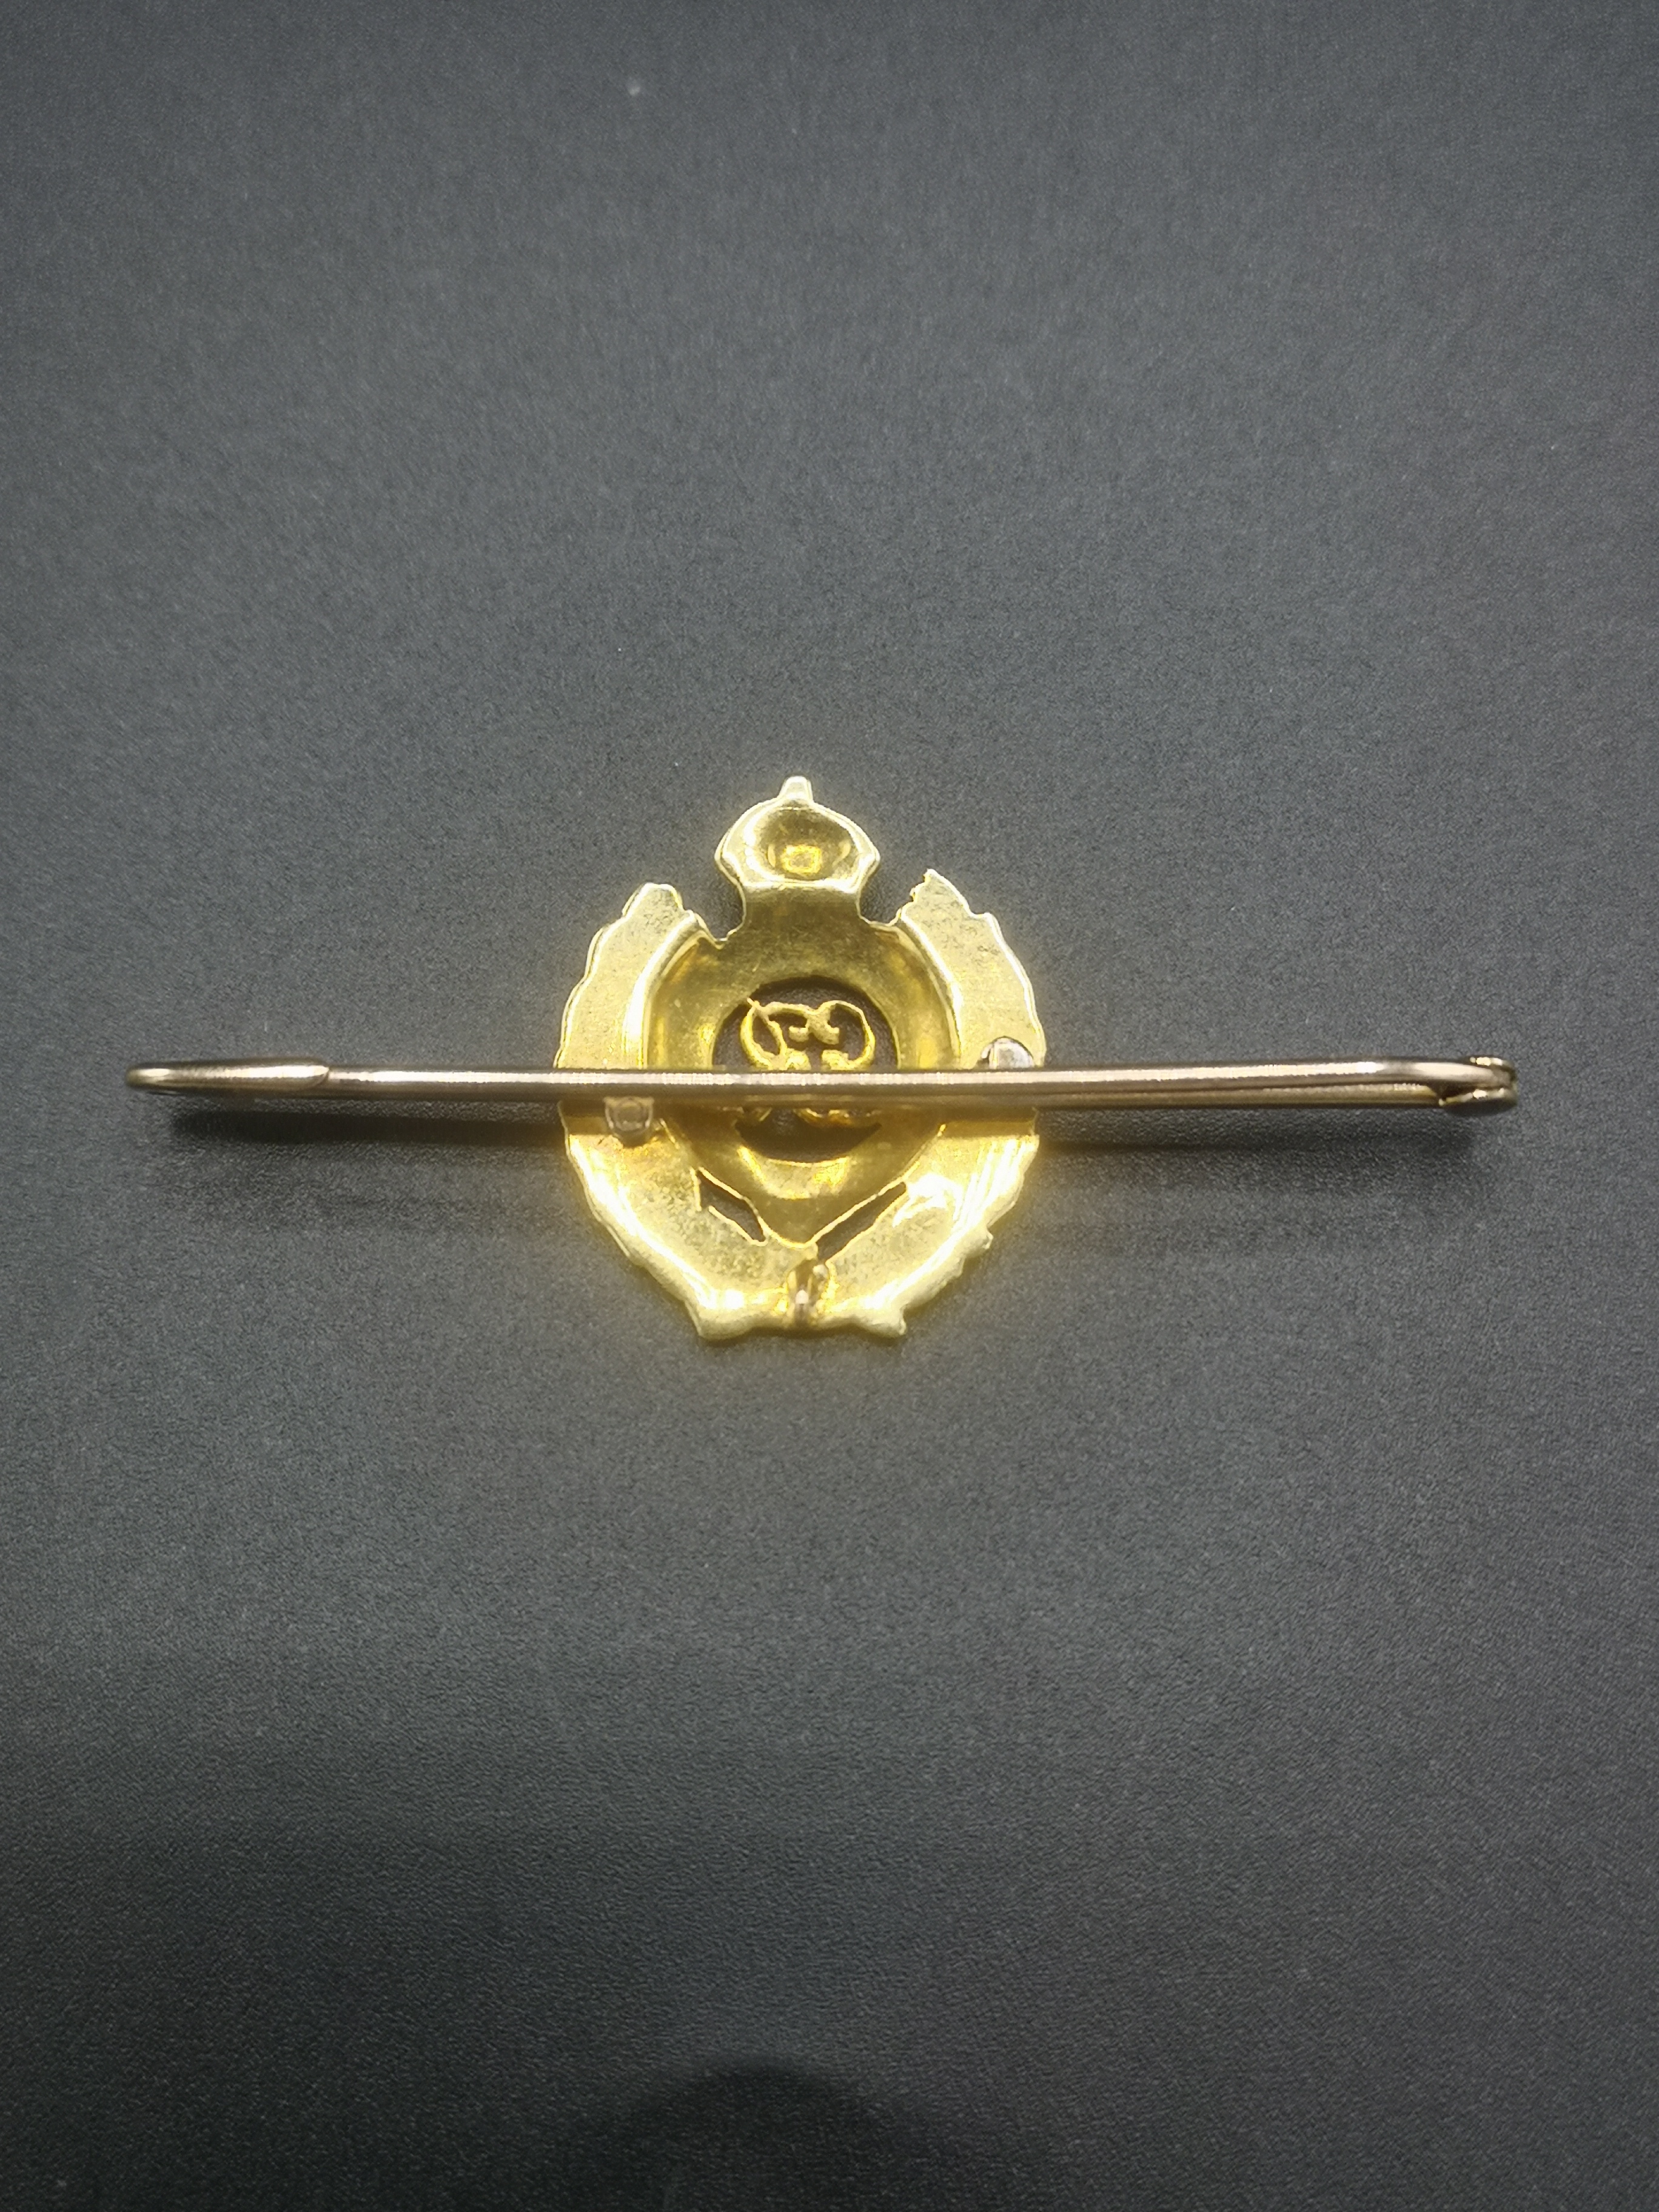 15ct gold Royal Engineers bar brooch - Image 3 of 3